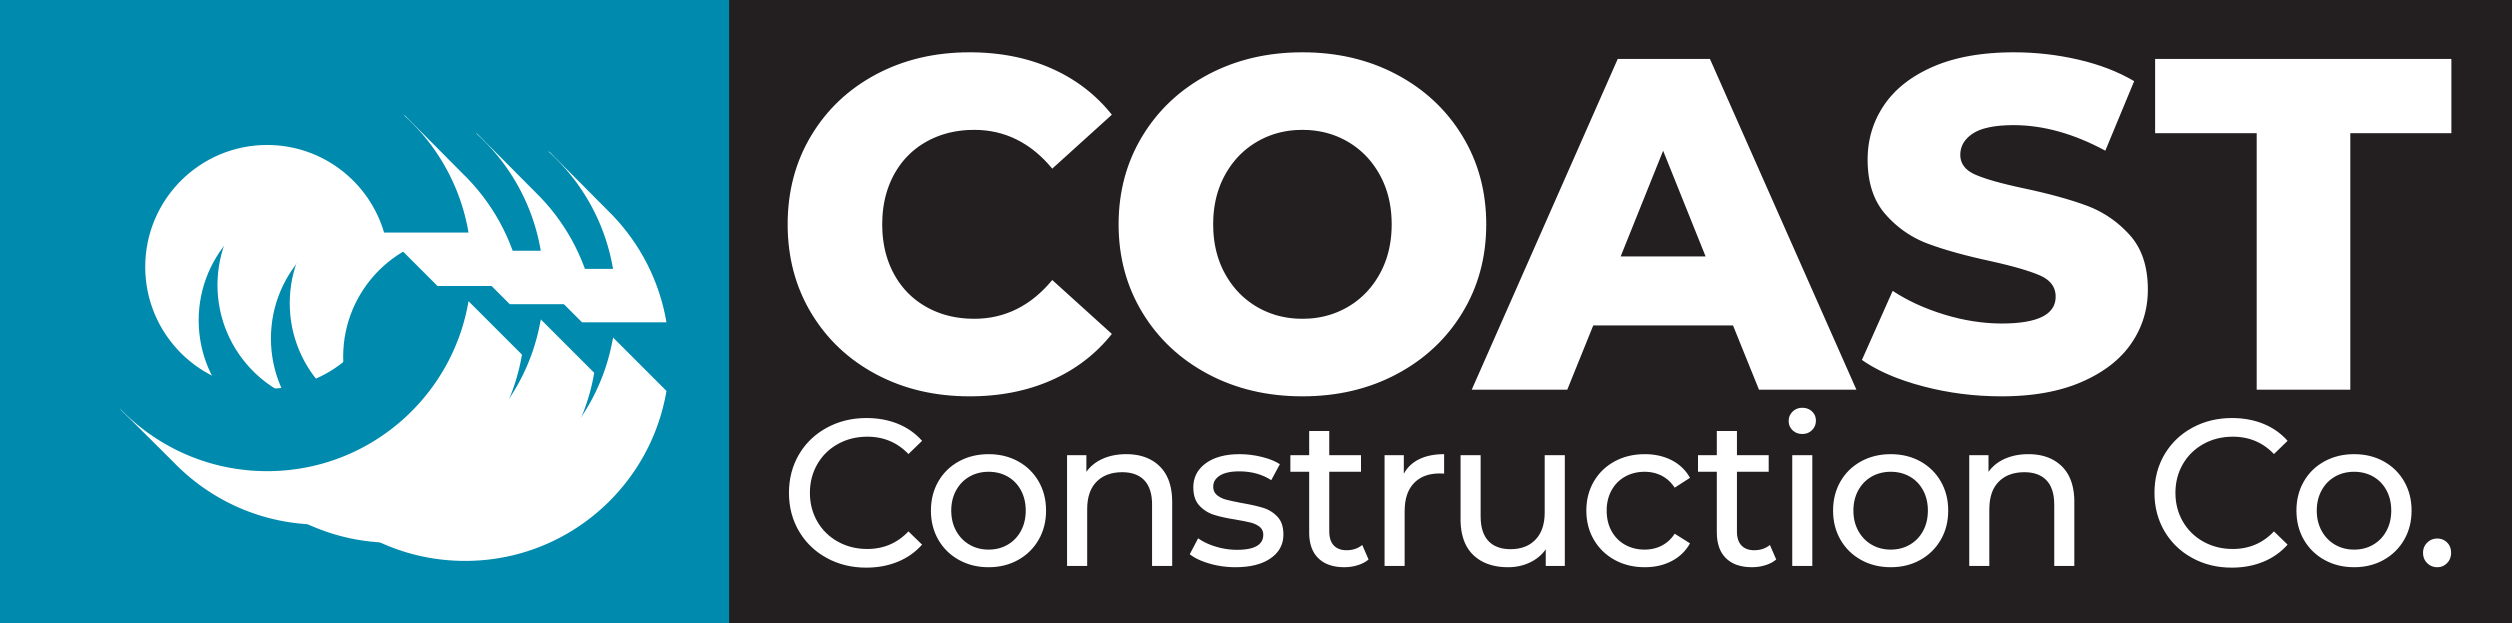 Coast Construction